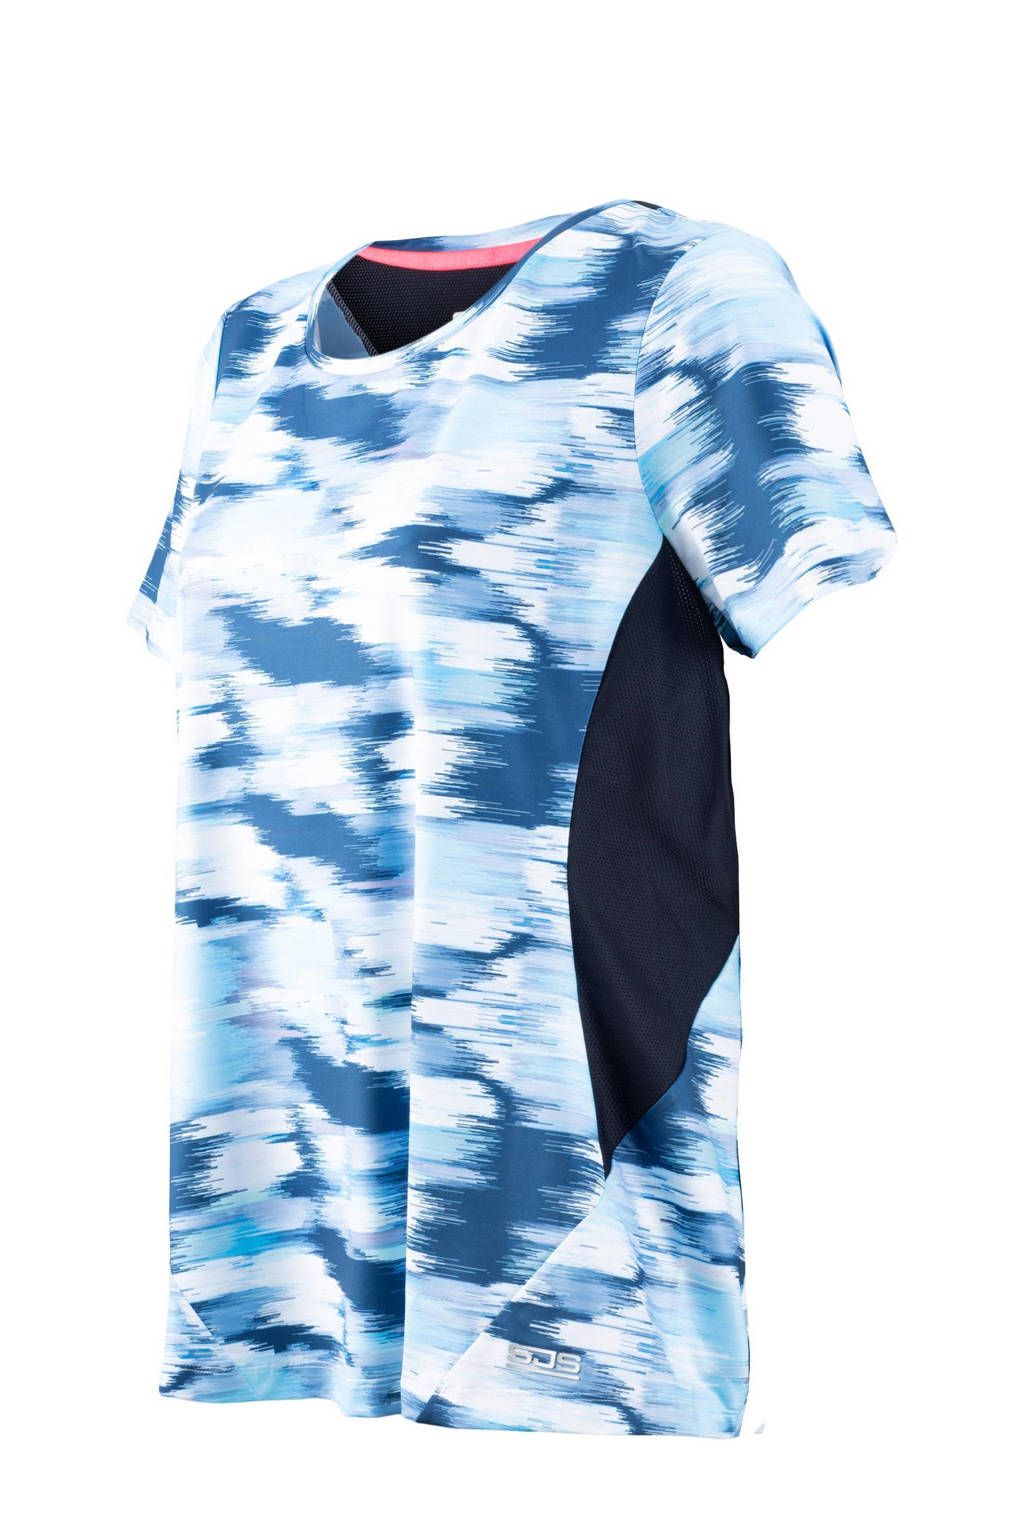 Sjeng Sports Plus Size sport T-shirt Bente Plus blauw/wit/donkerblauw, Blauw/wit/donkerblauw